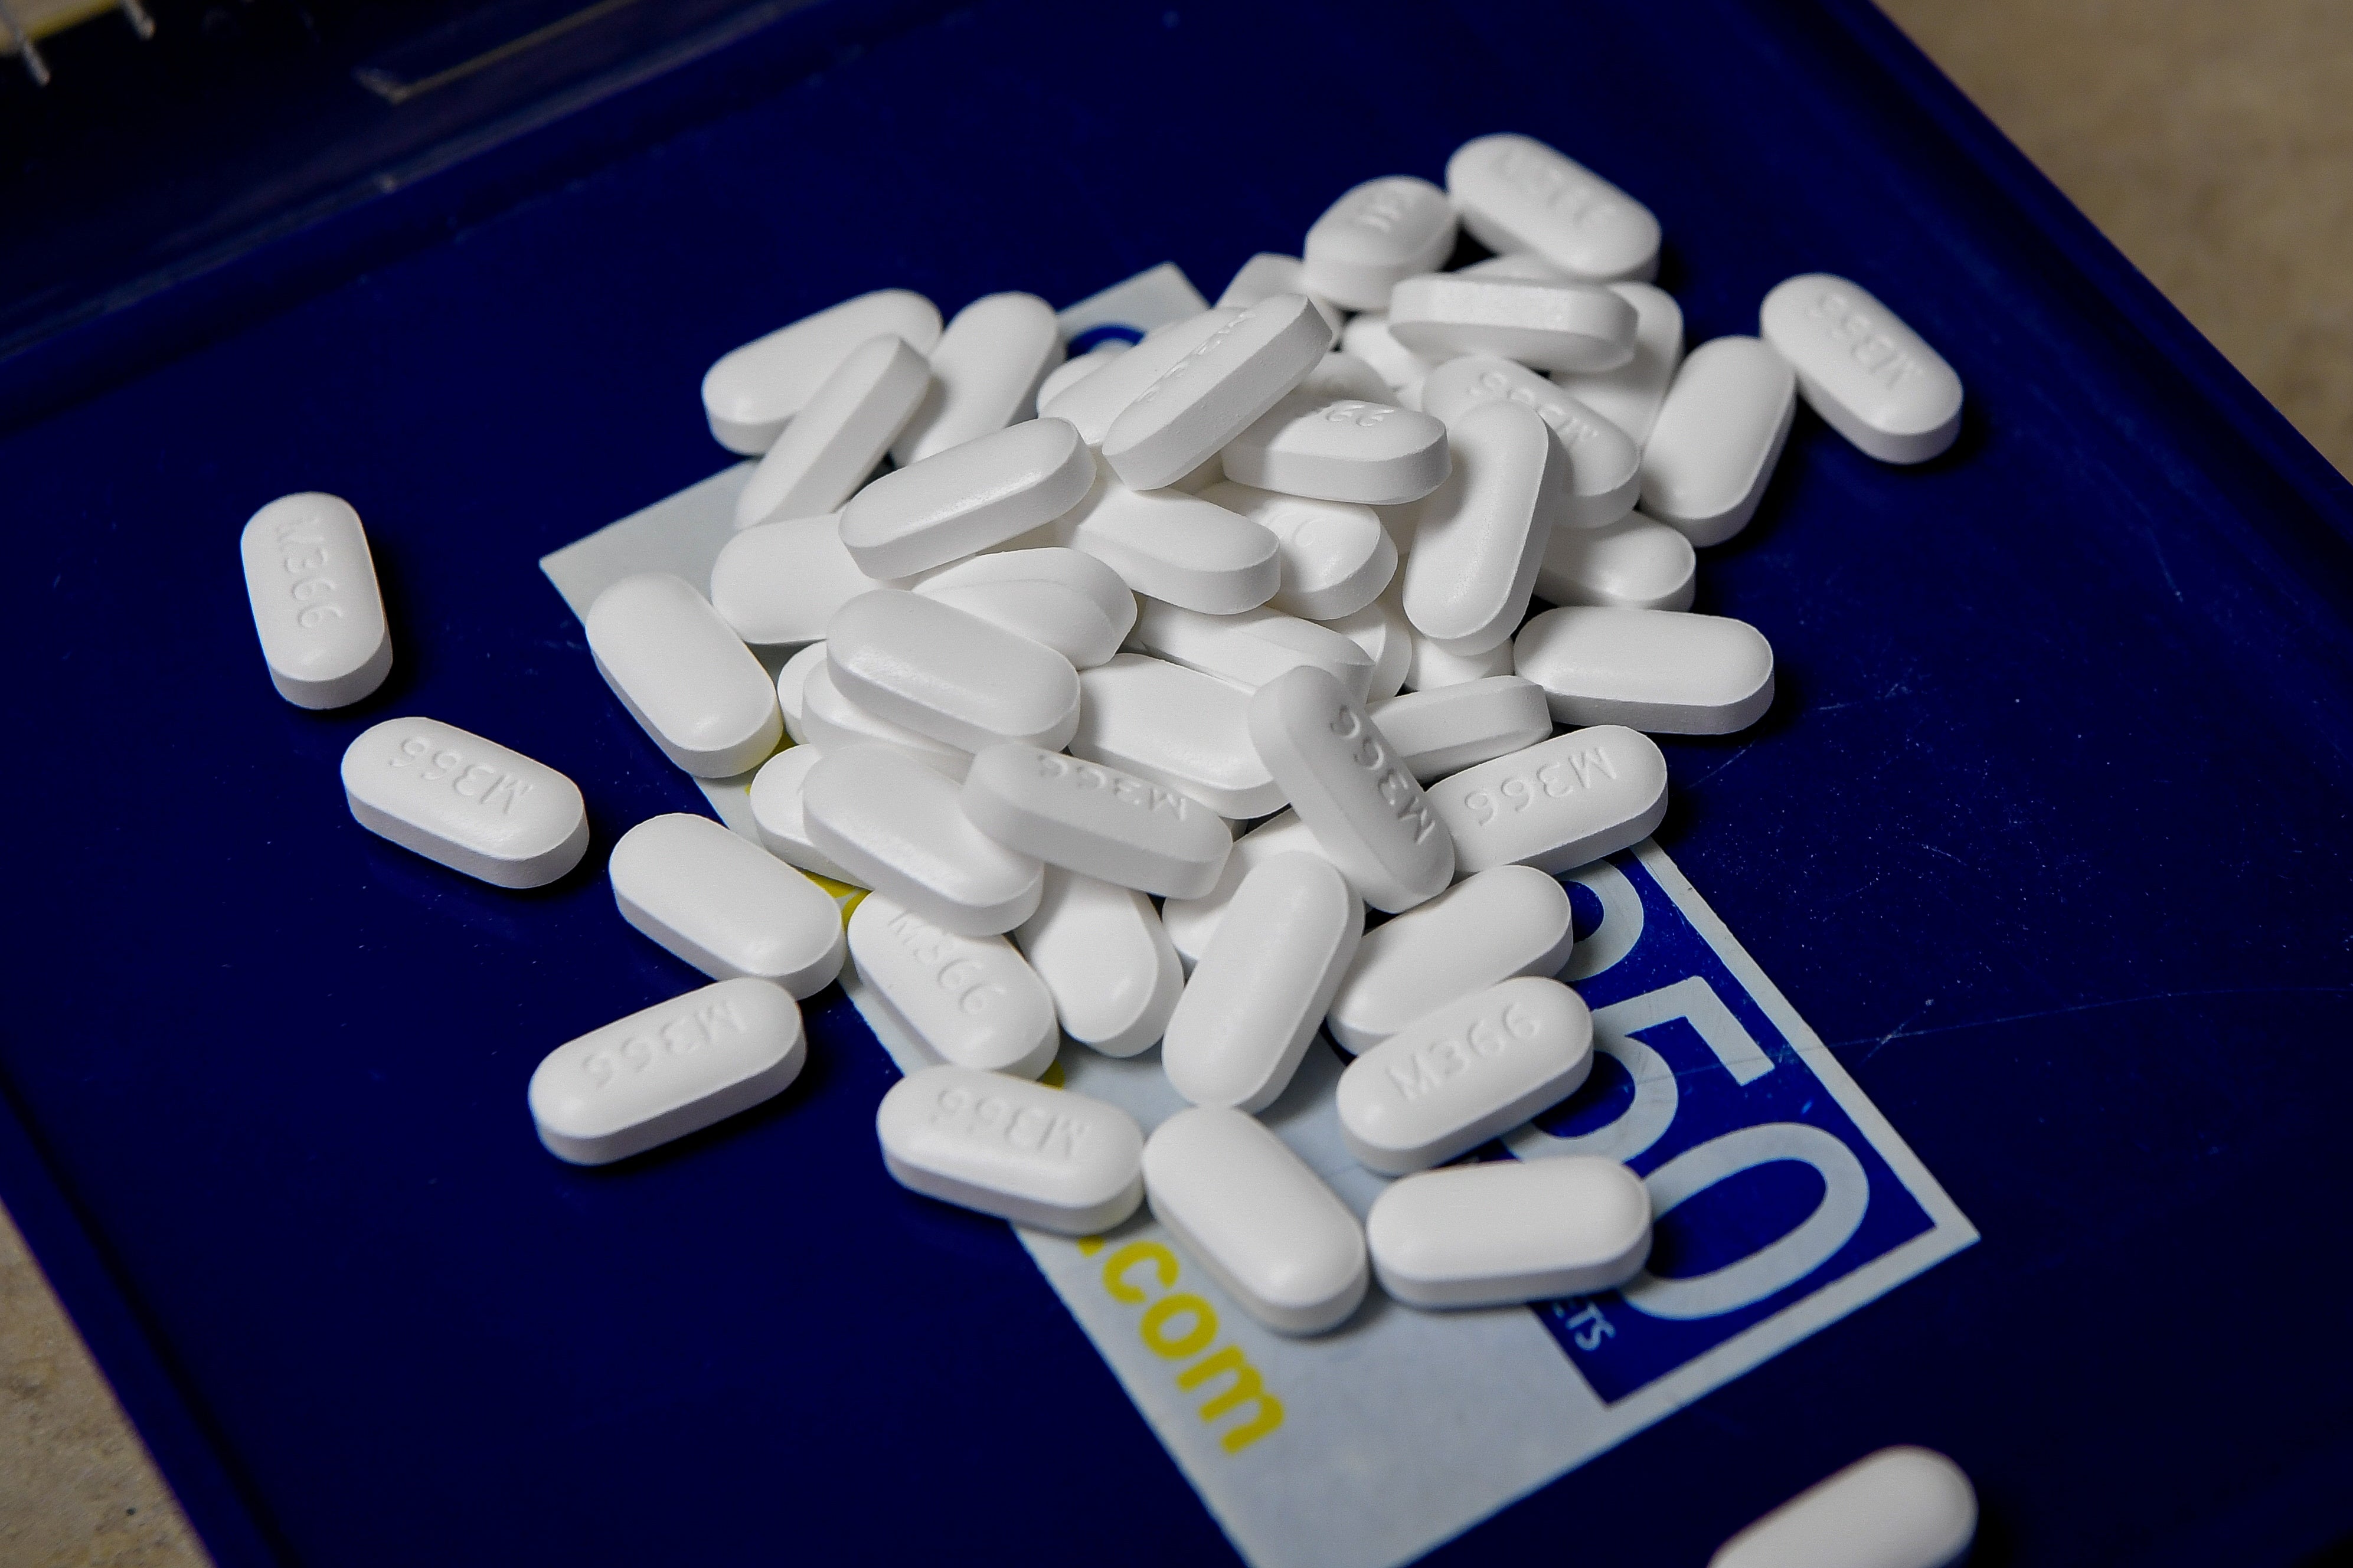 Hydrocodone tablets in a pharmacy tray